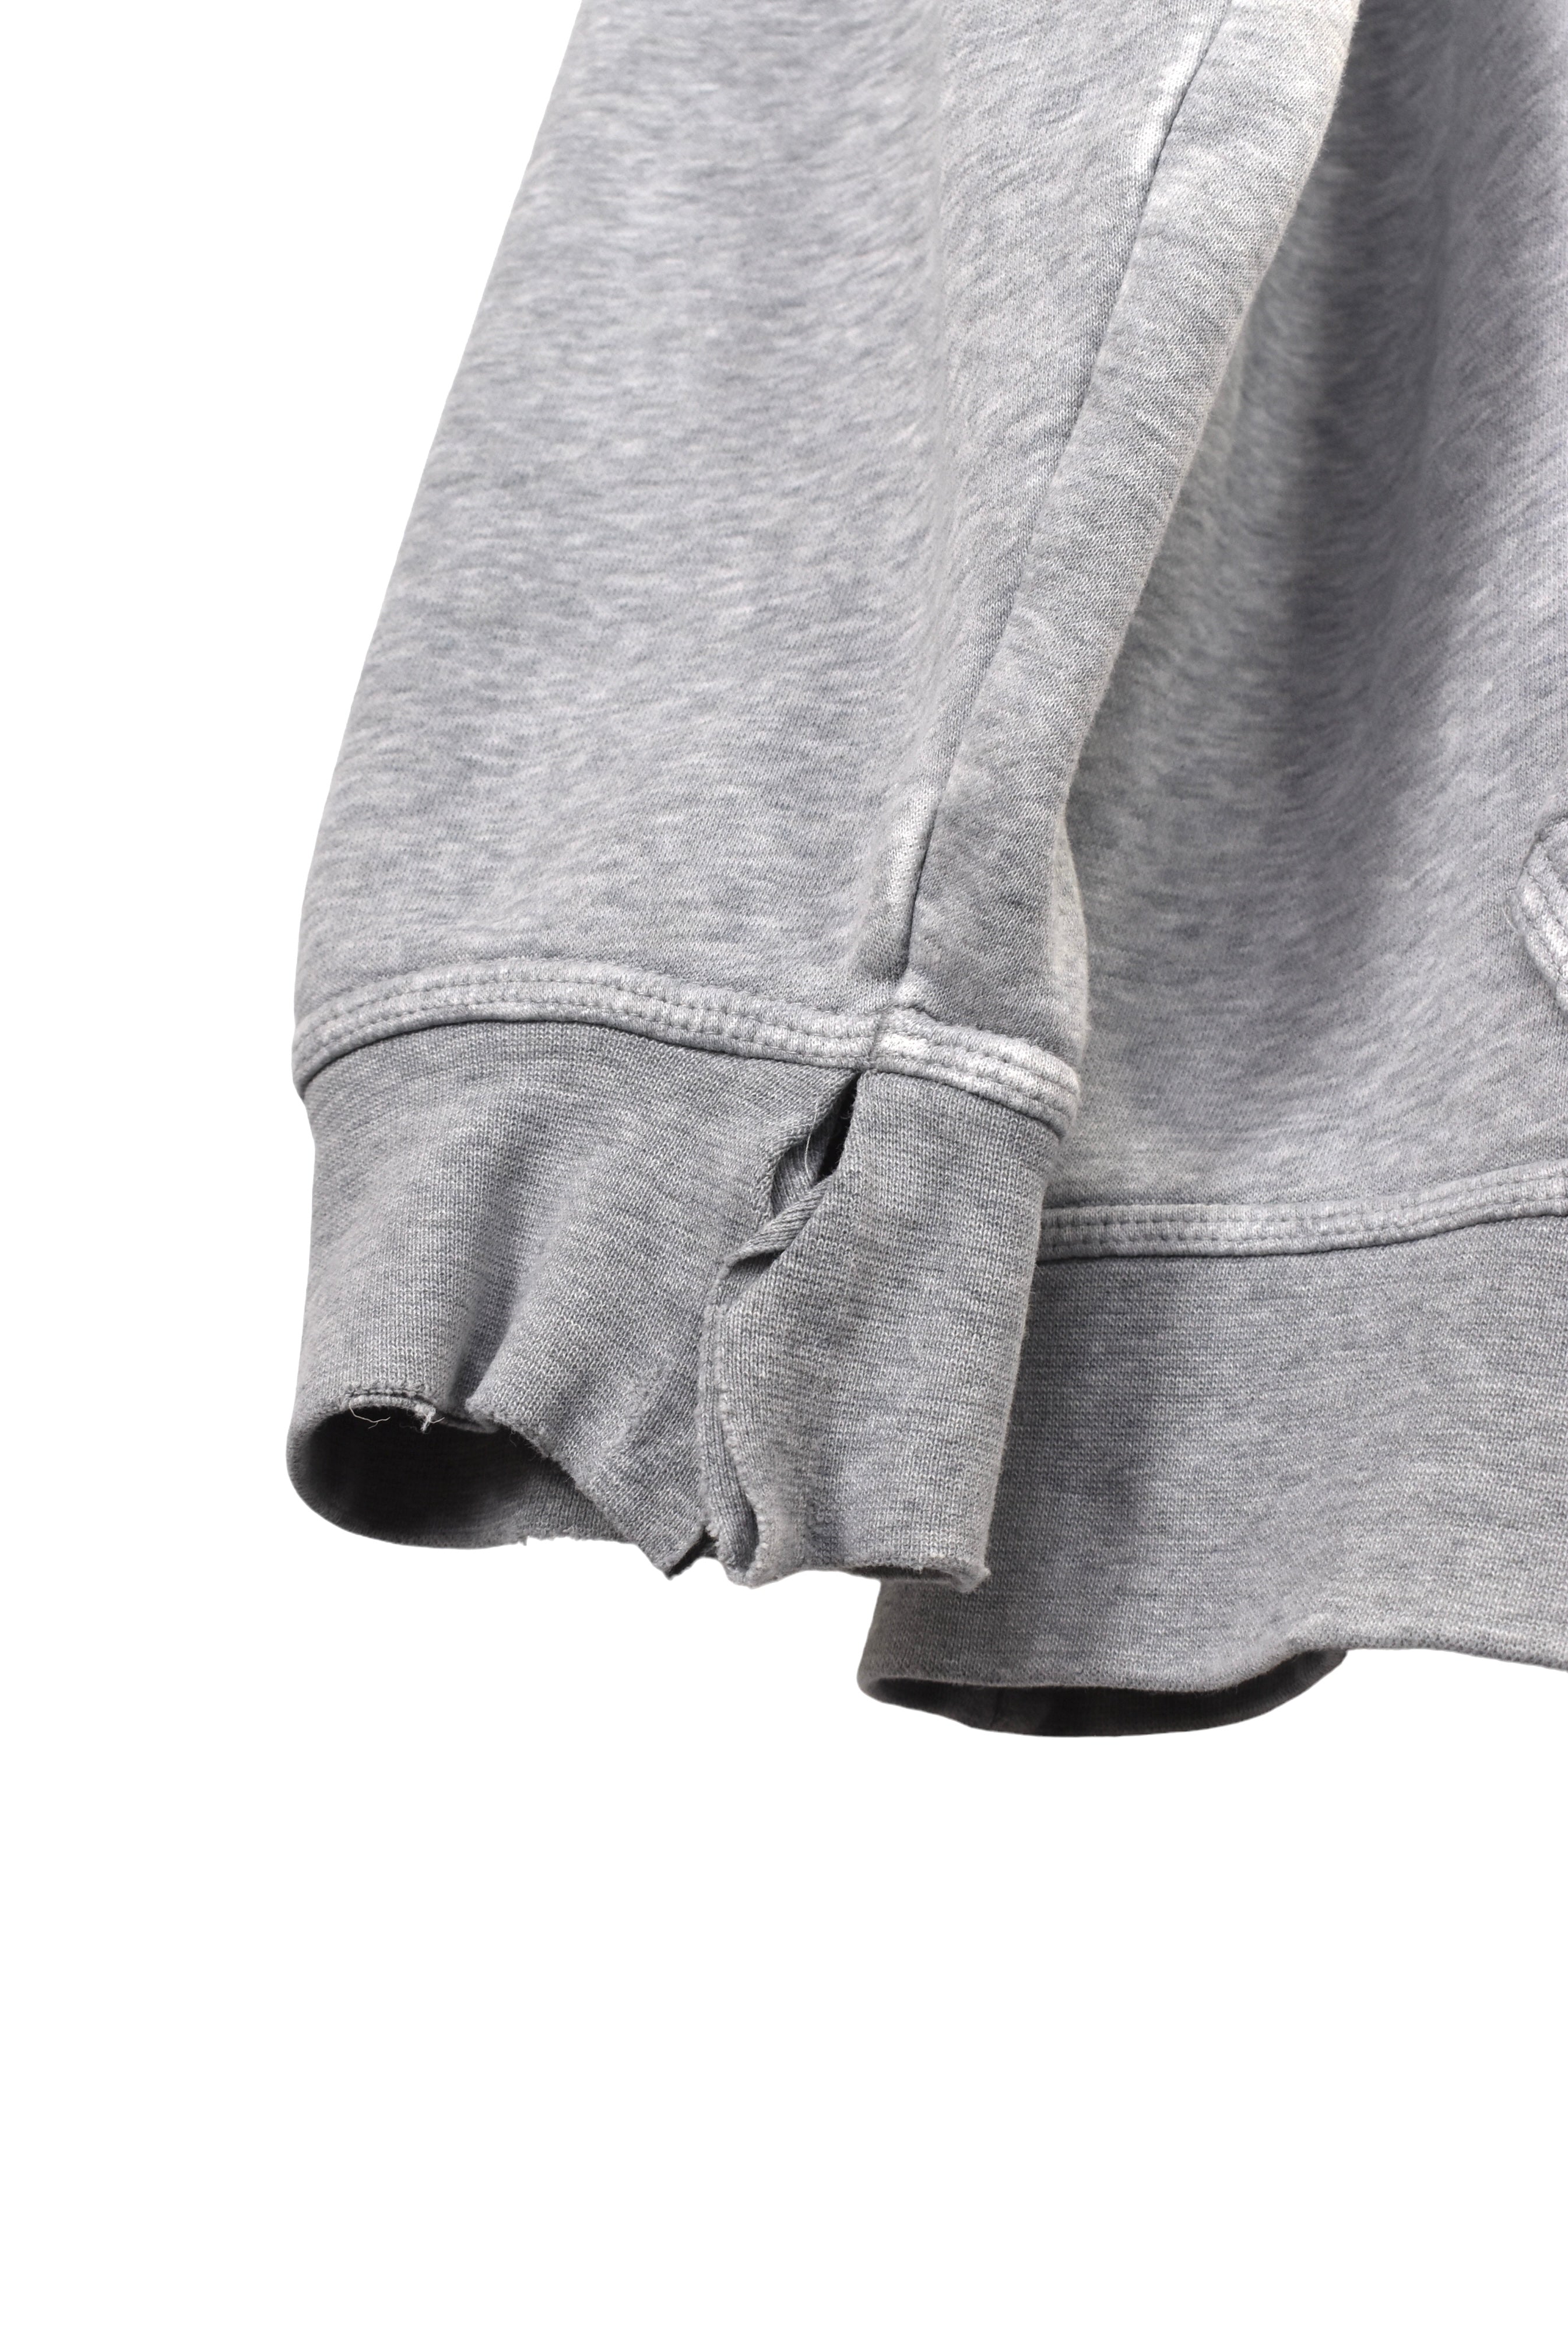 Vintage Nike hoodie, grey centre swoosh embroidered sweatshirt - Large